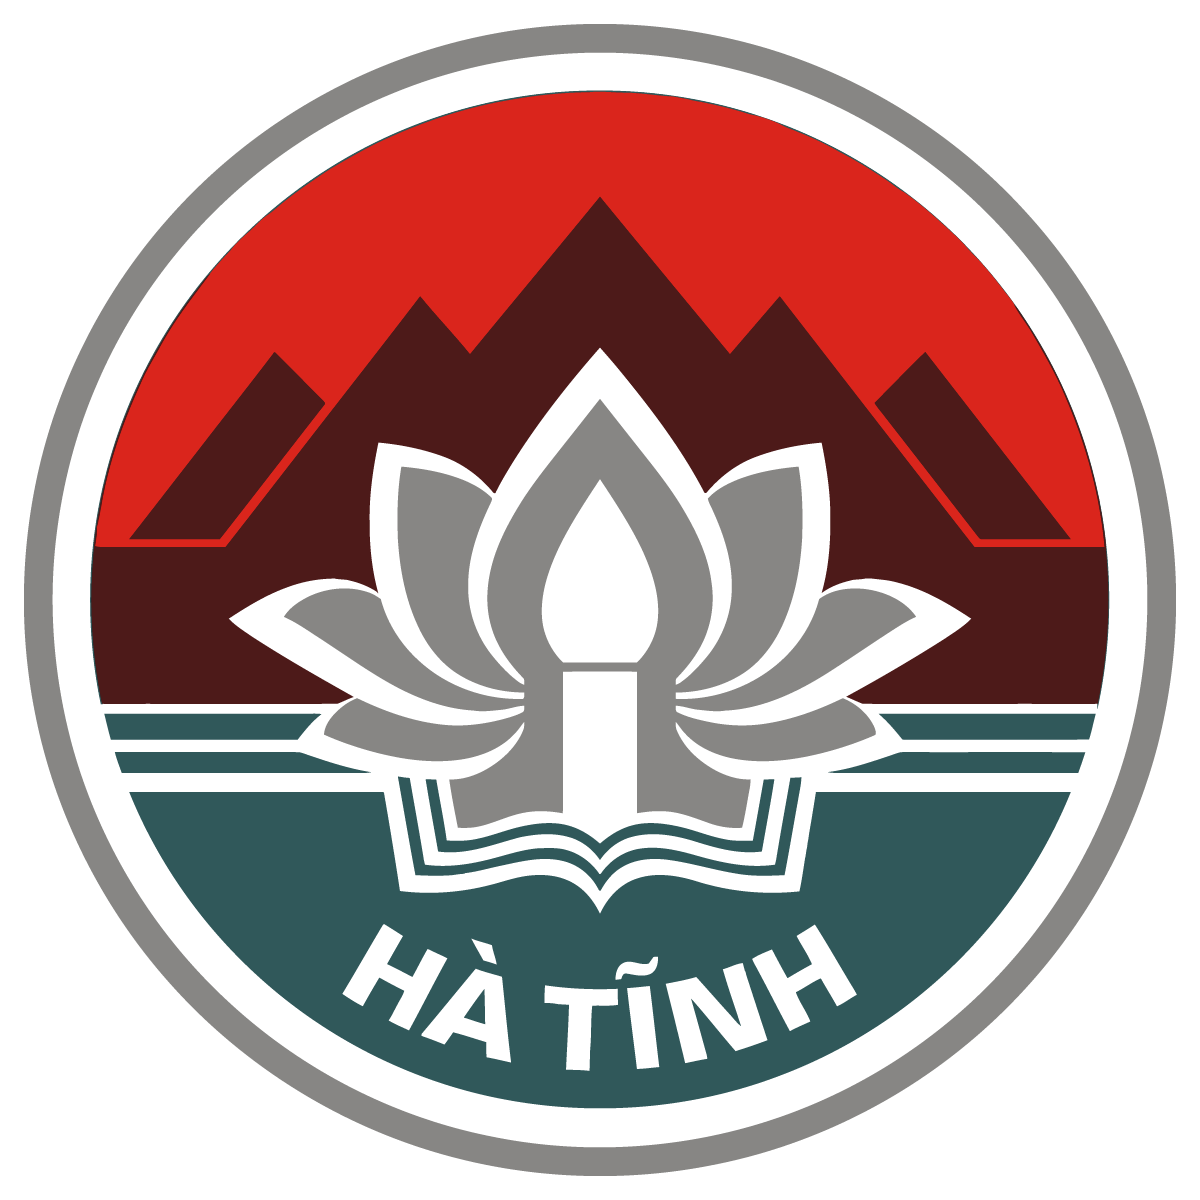 Logo Ha Tinh